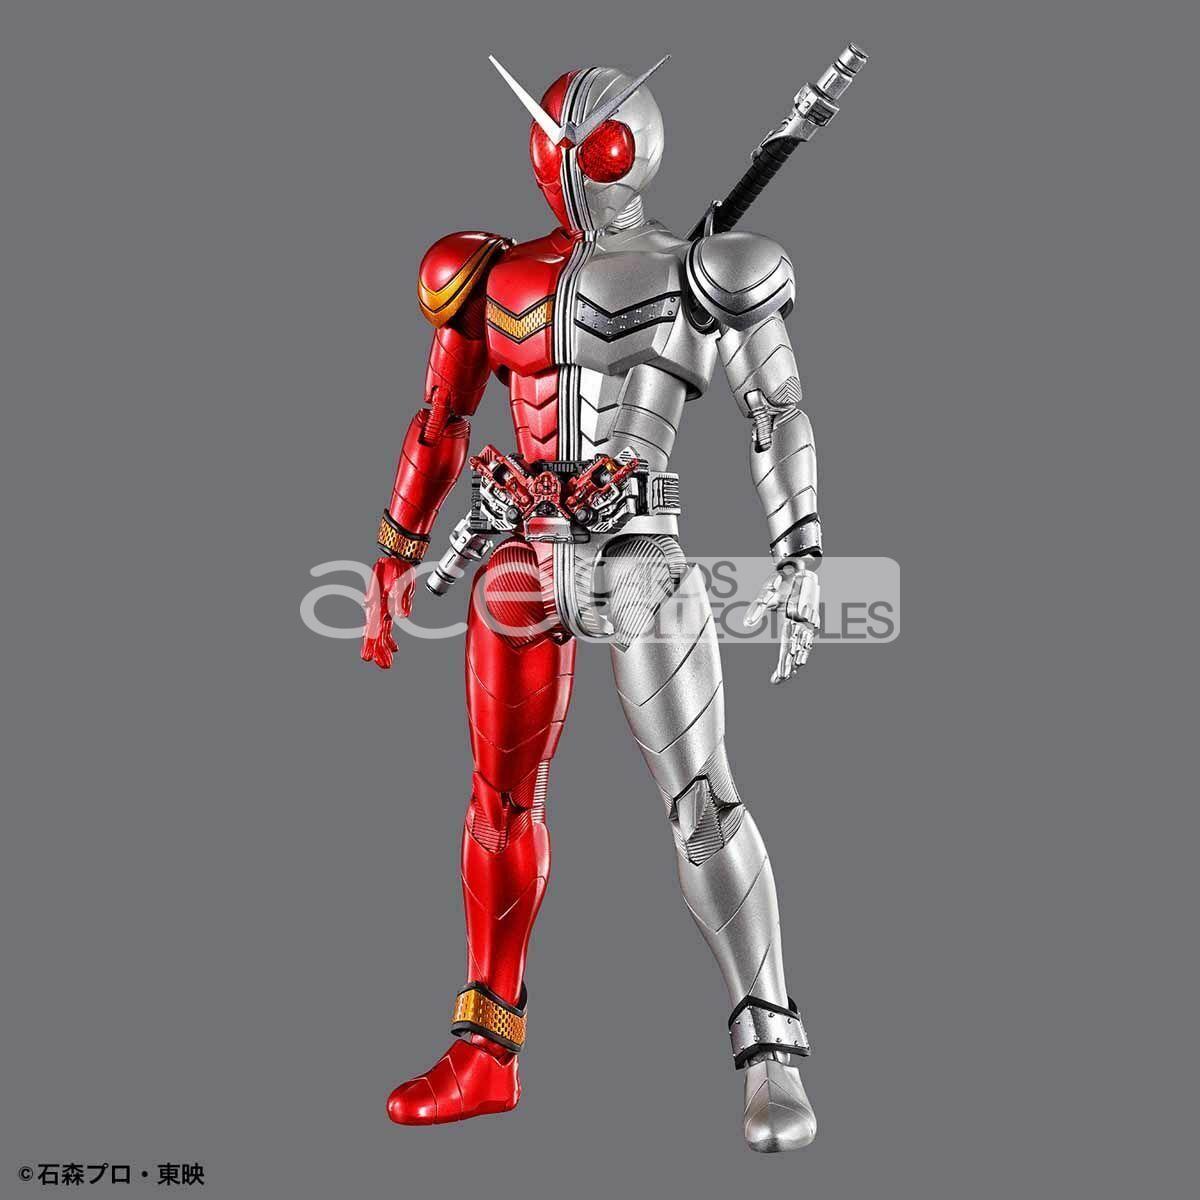 Kamen Rider Figure-rise Standard Kamen Rider Double Heatmetal-Bandai-Ace Cards & Collectibles